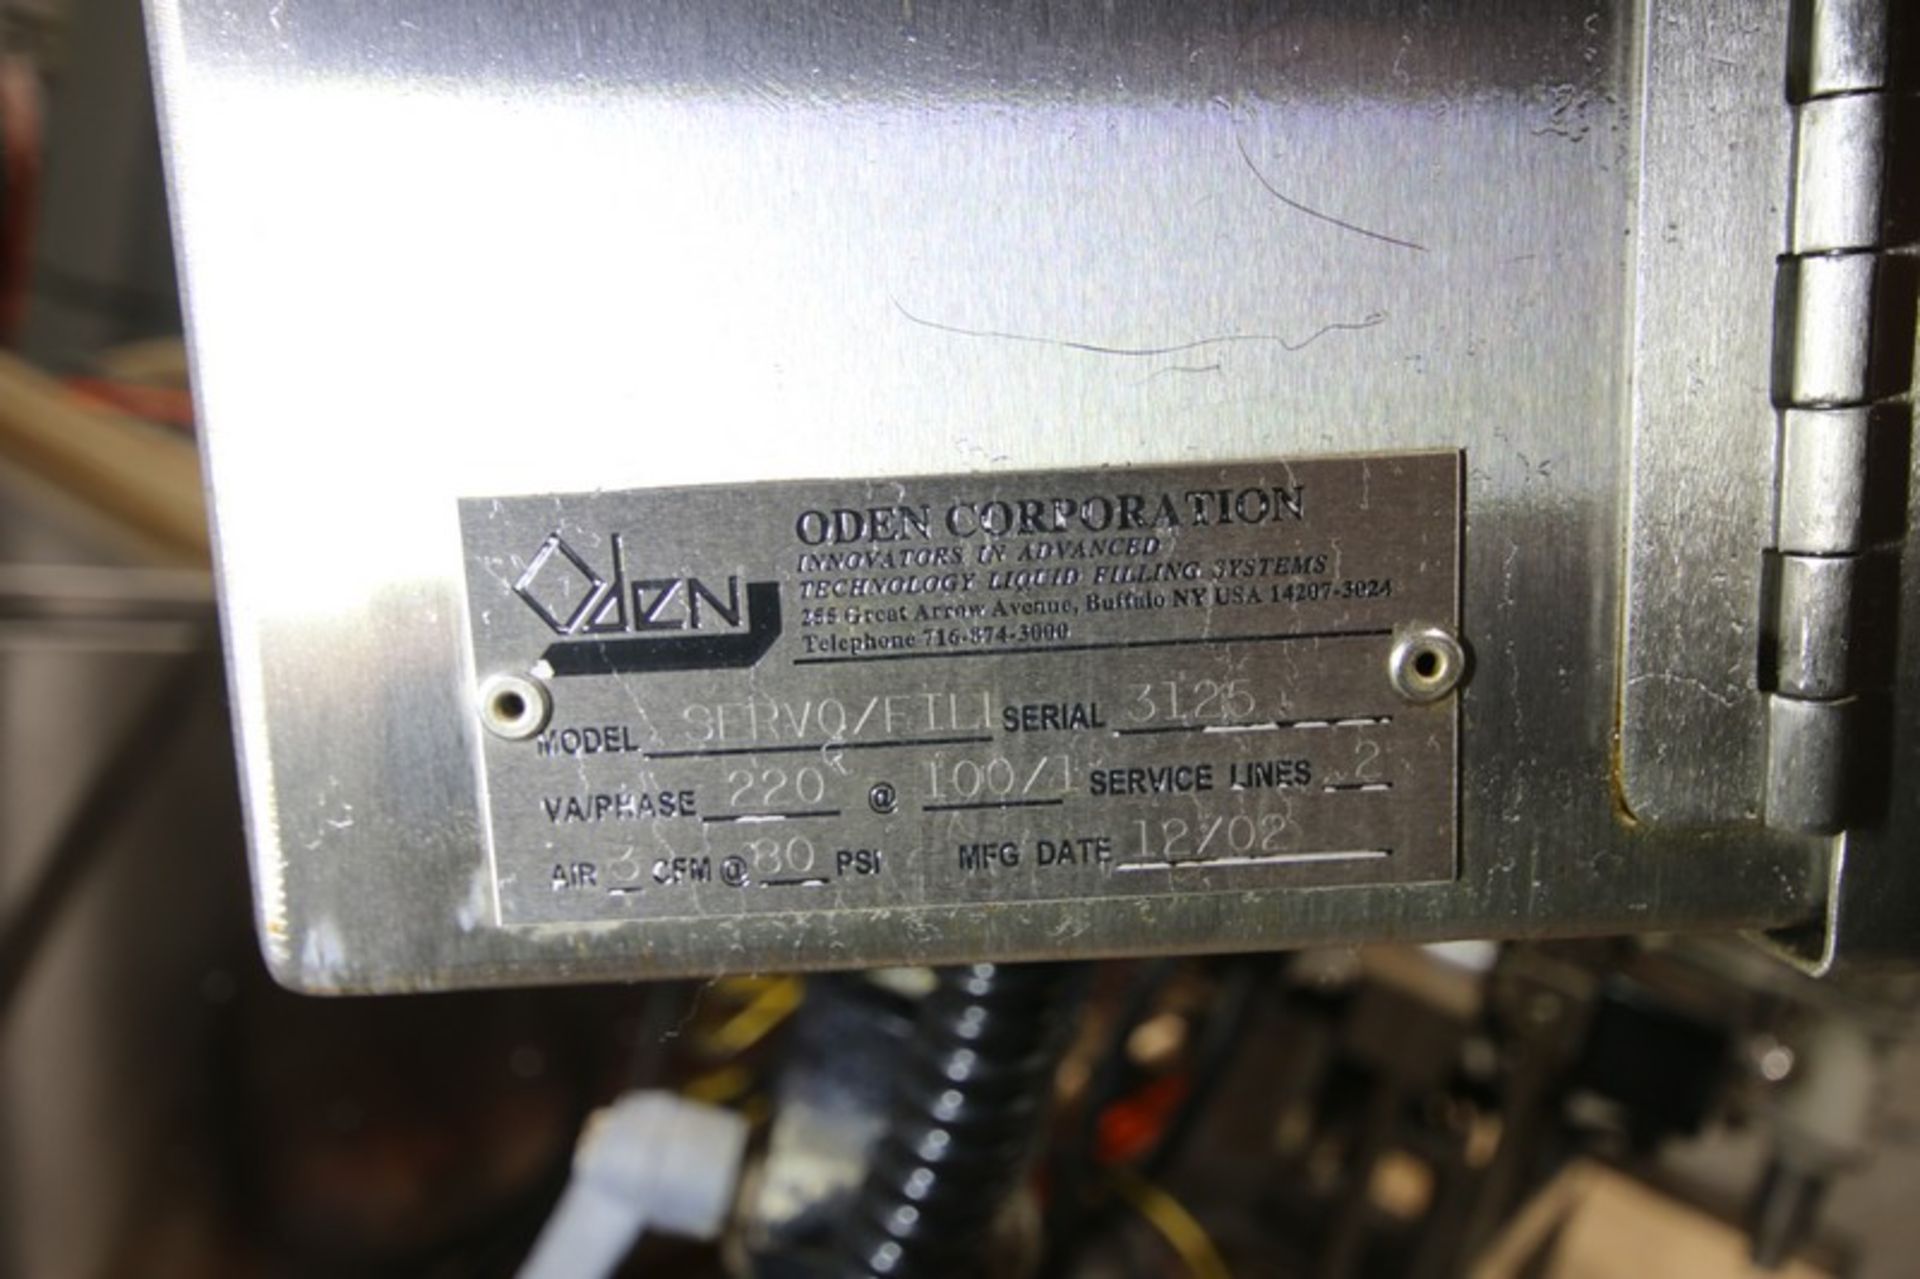 Oden 10 - Valve S/S Servo Filler, Model SERVO/FILL SN 3125, with (10) Waukesha Size 015 Positive - Image 12 of 12